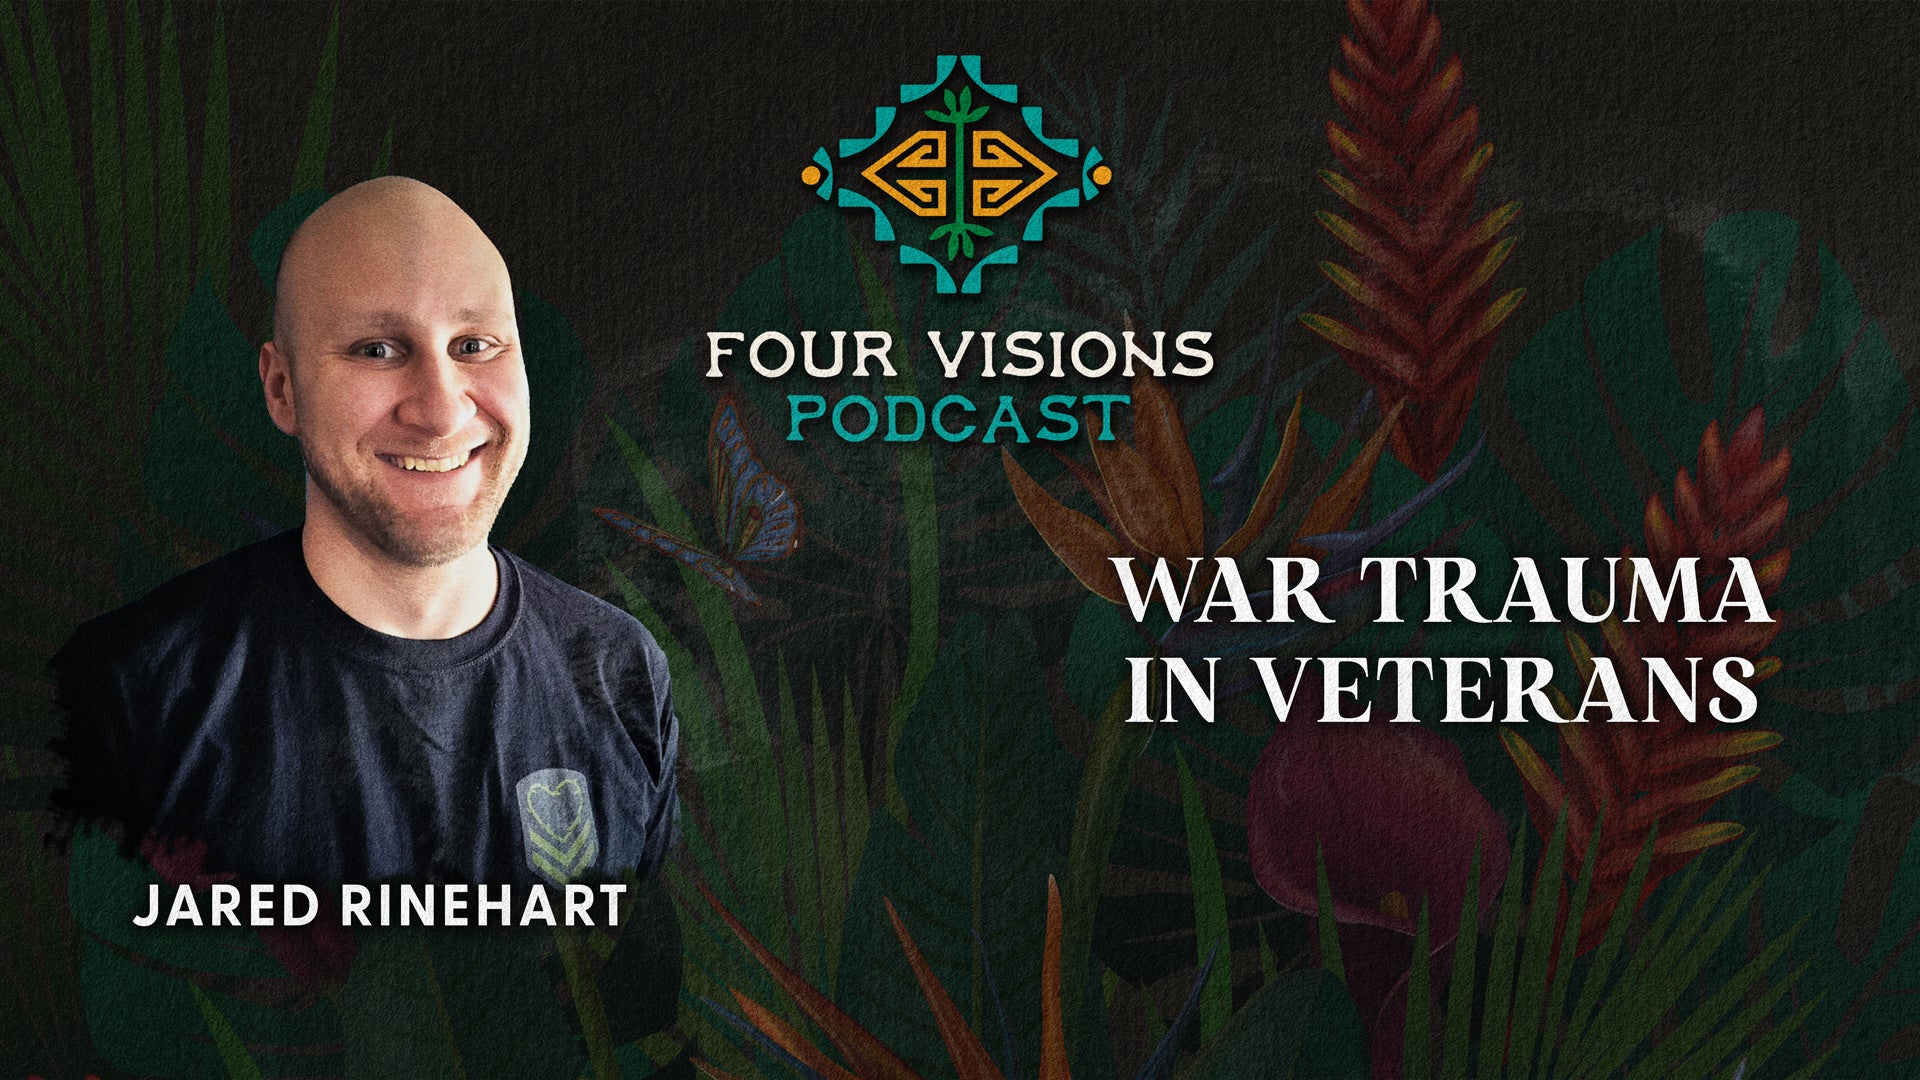 30 - Healing War Trauma in Veterans: Jared Rinehart's Story of Ayahuasca and the Heroic Hearts Project